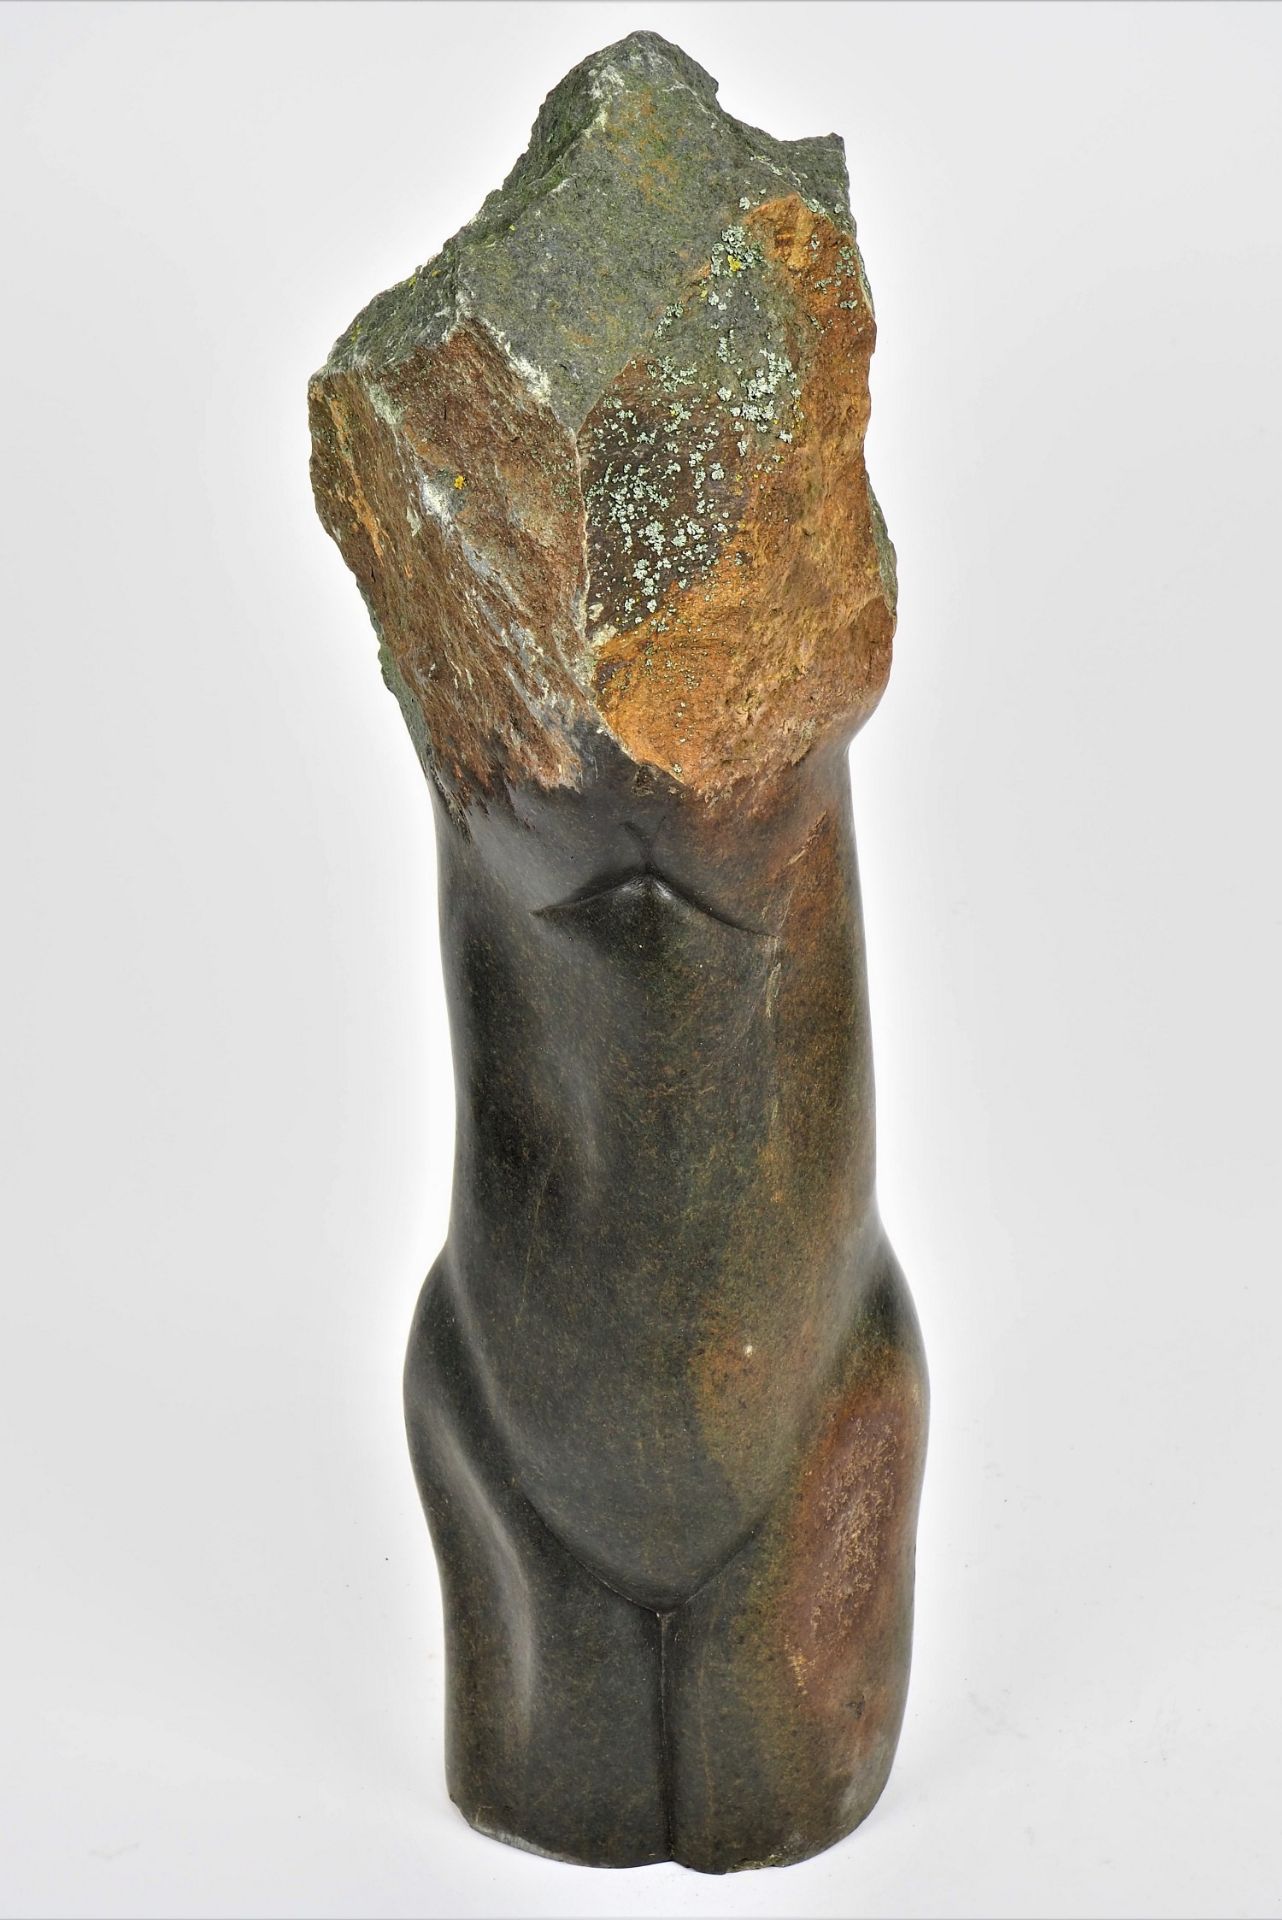 Shona sculpture, female nude torso